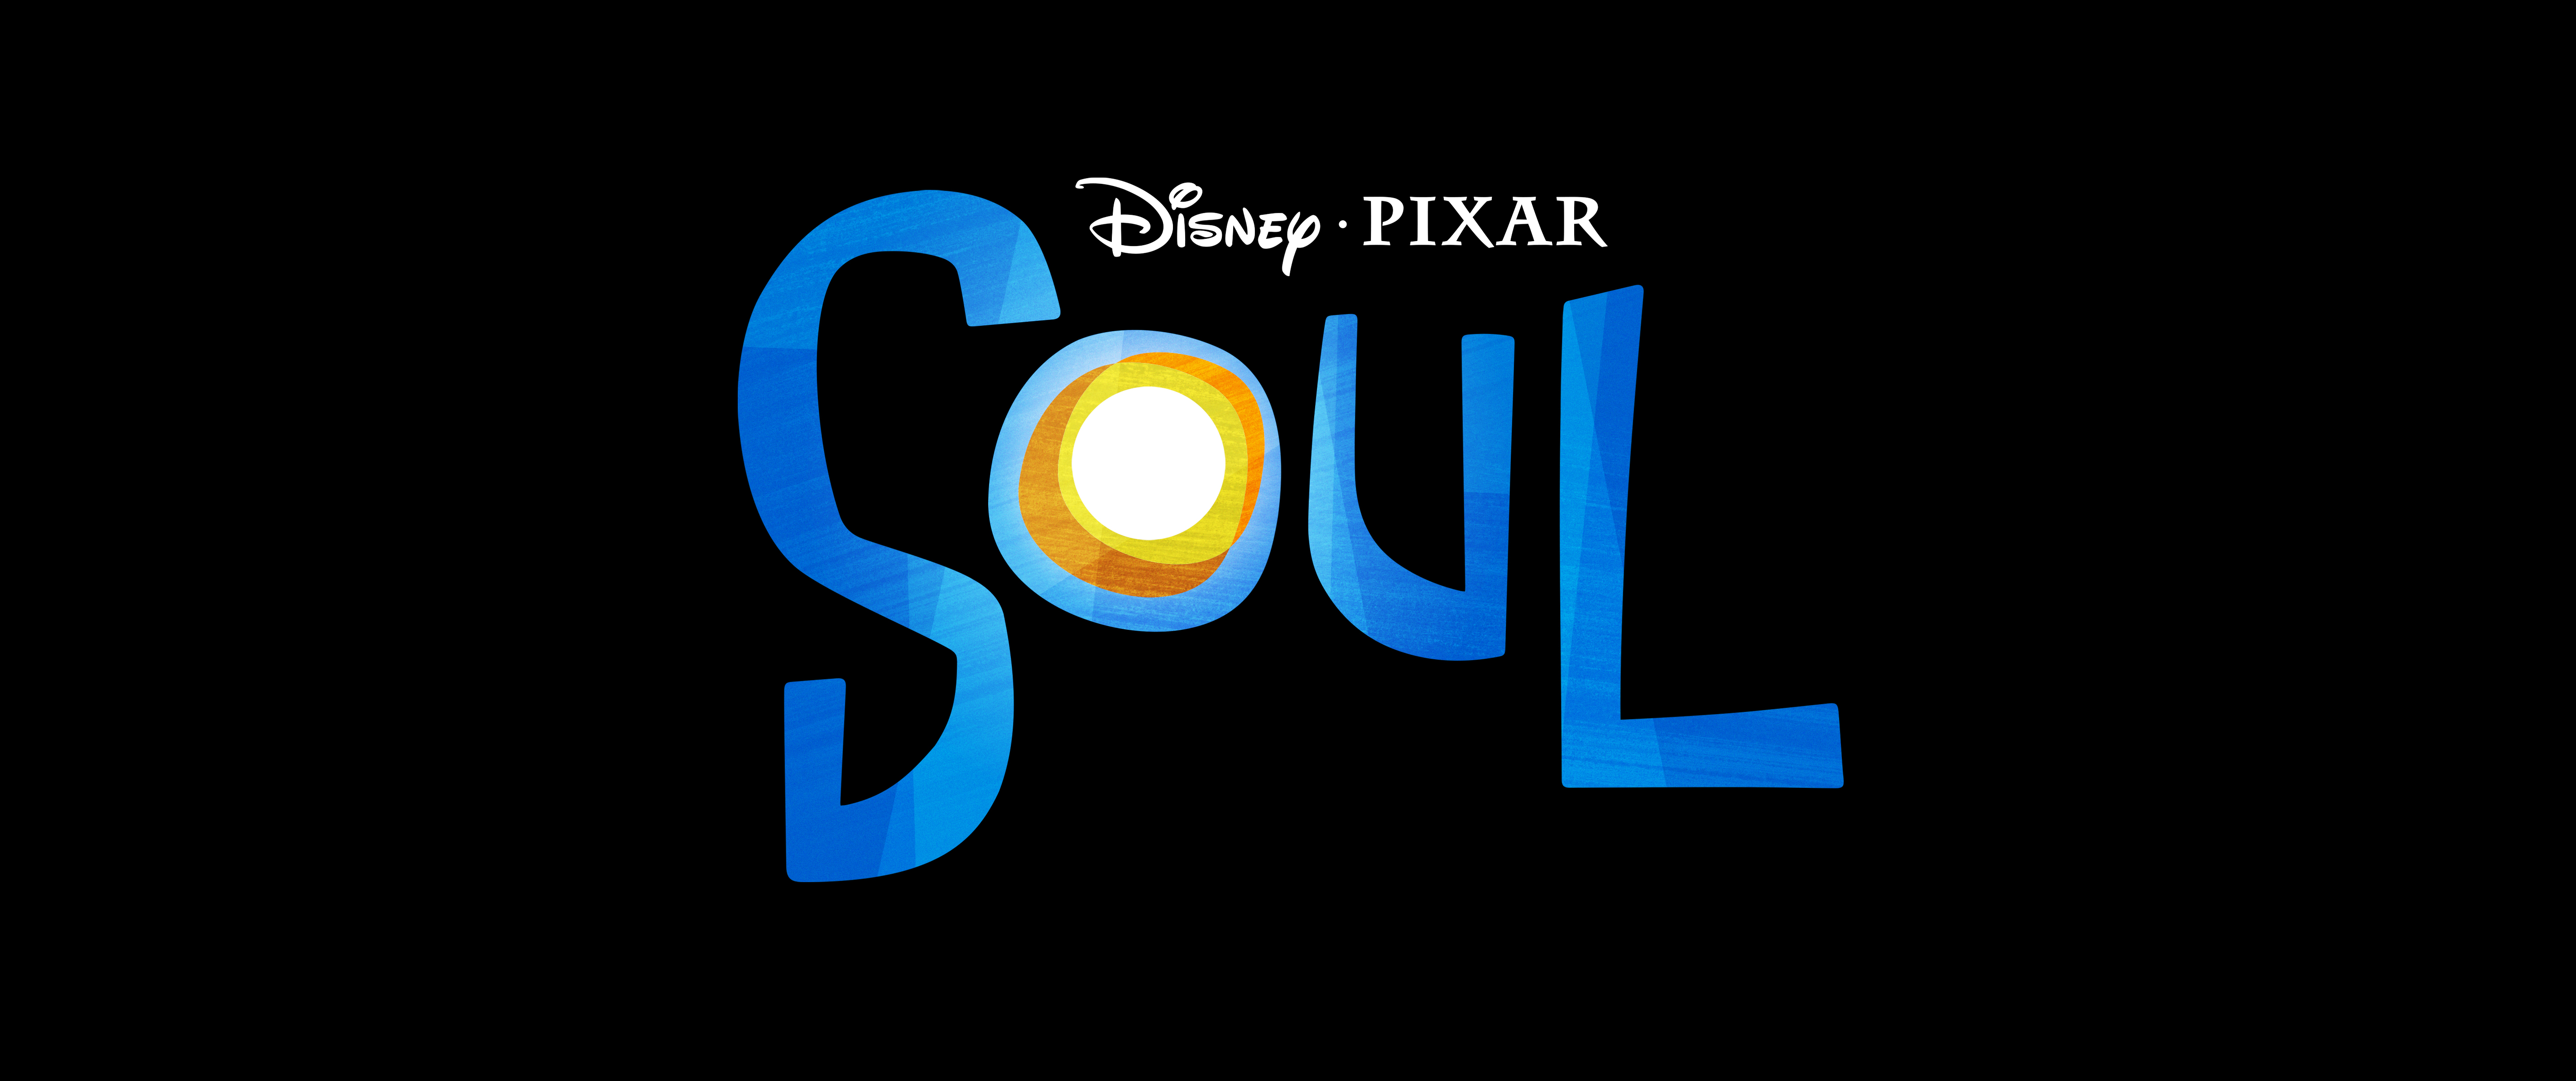 Pixar’s Soul is coming to Disney+